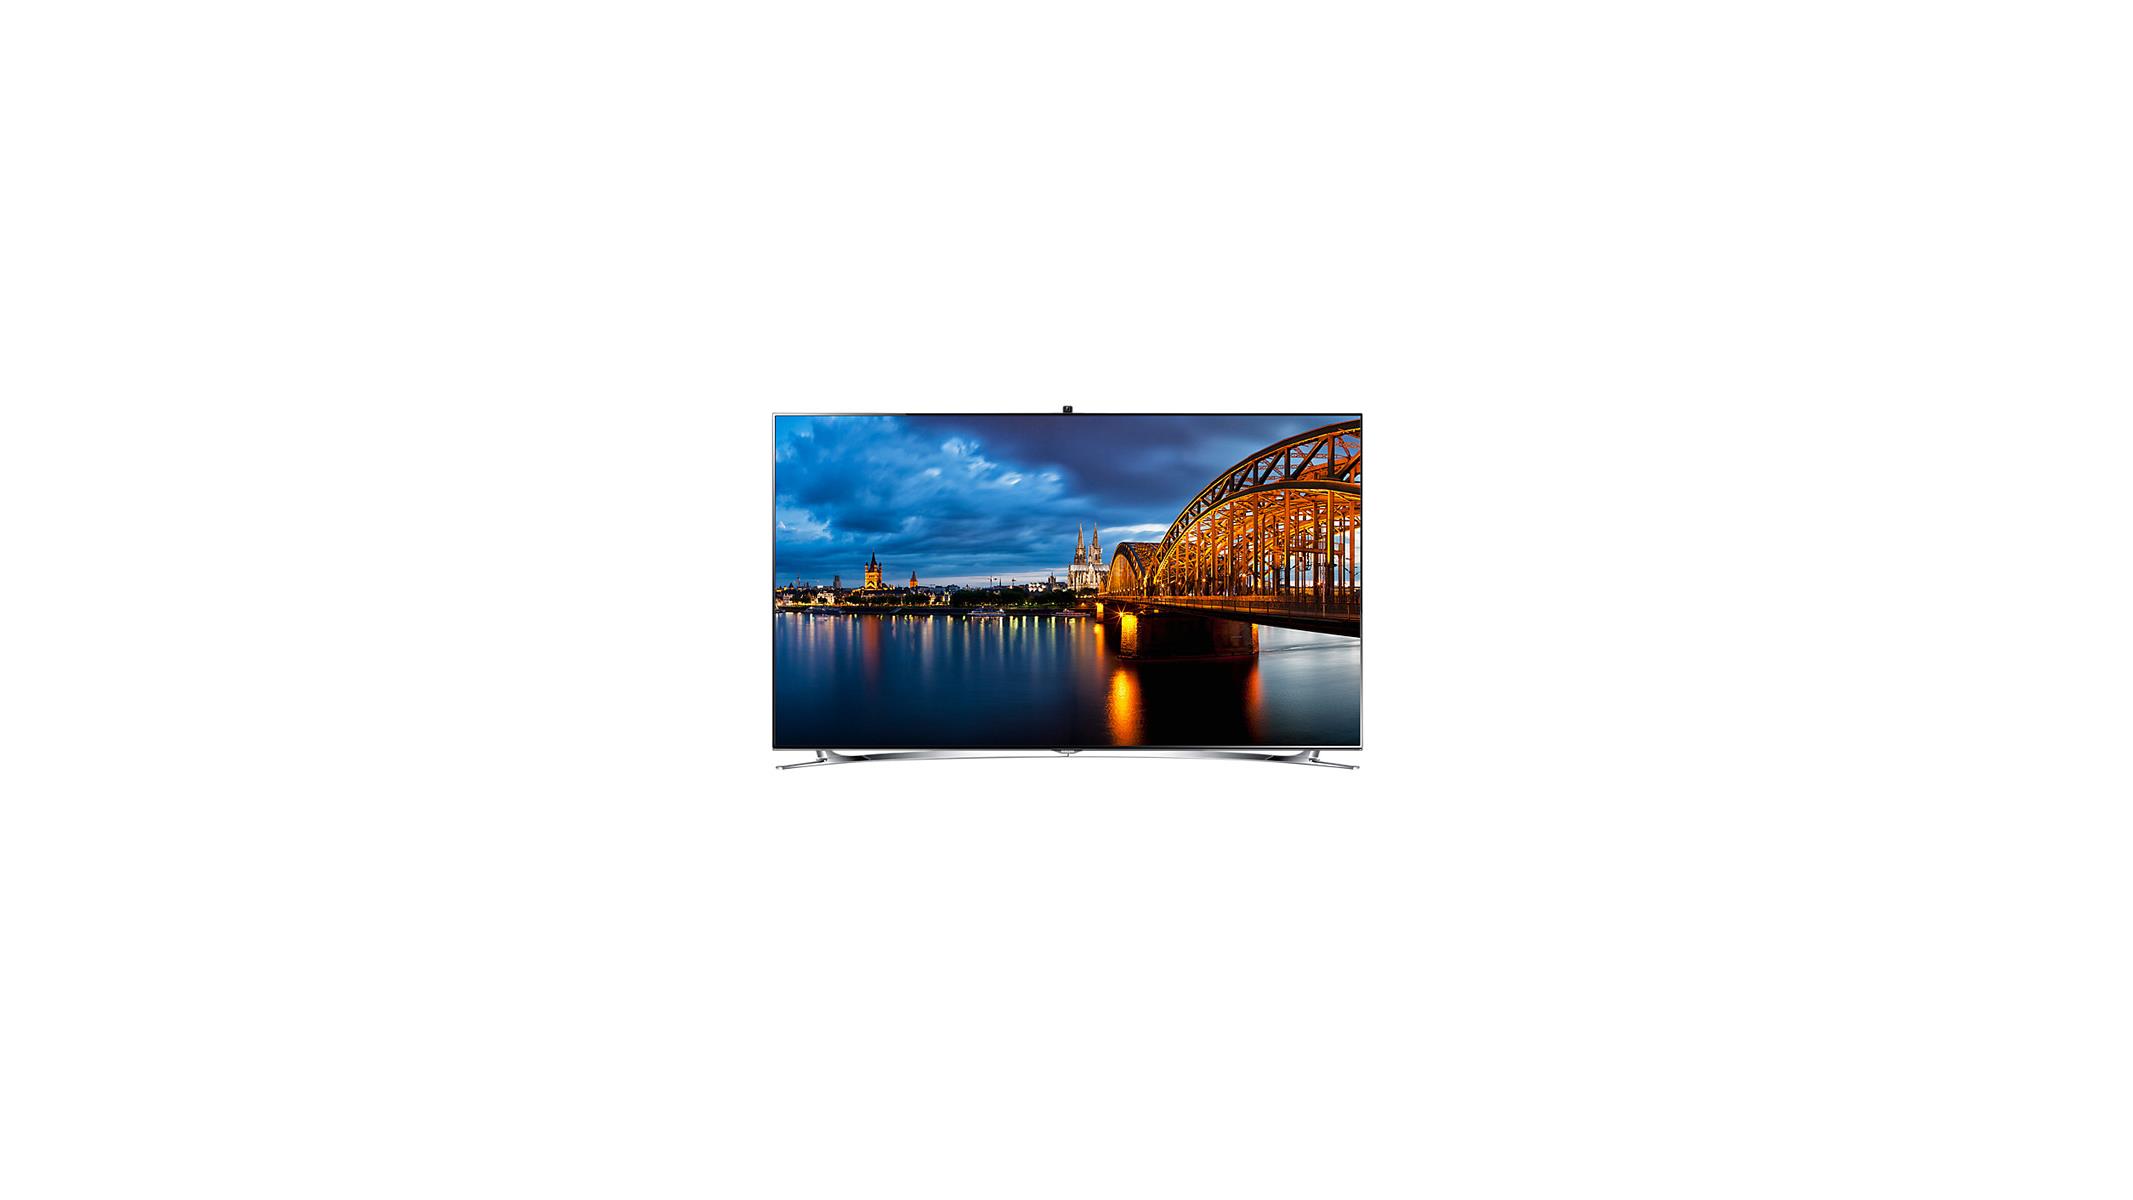 Truss Bridge - HD Wallpaper 